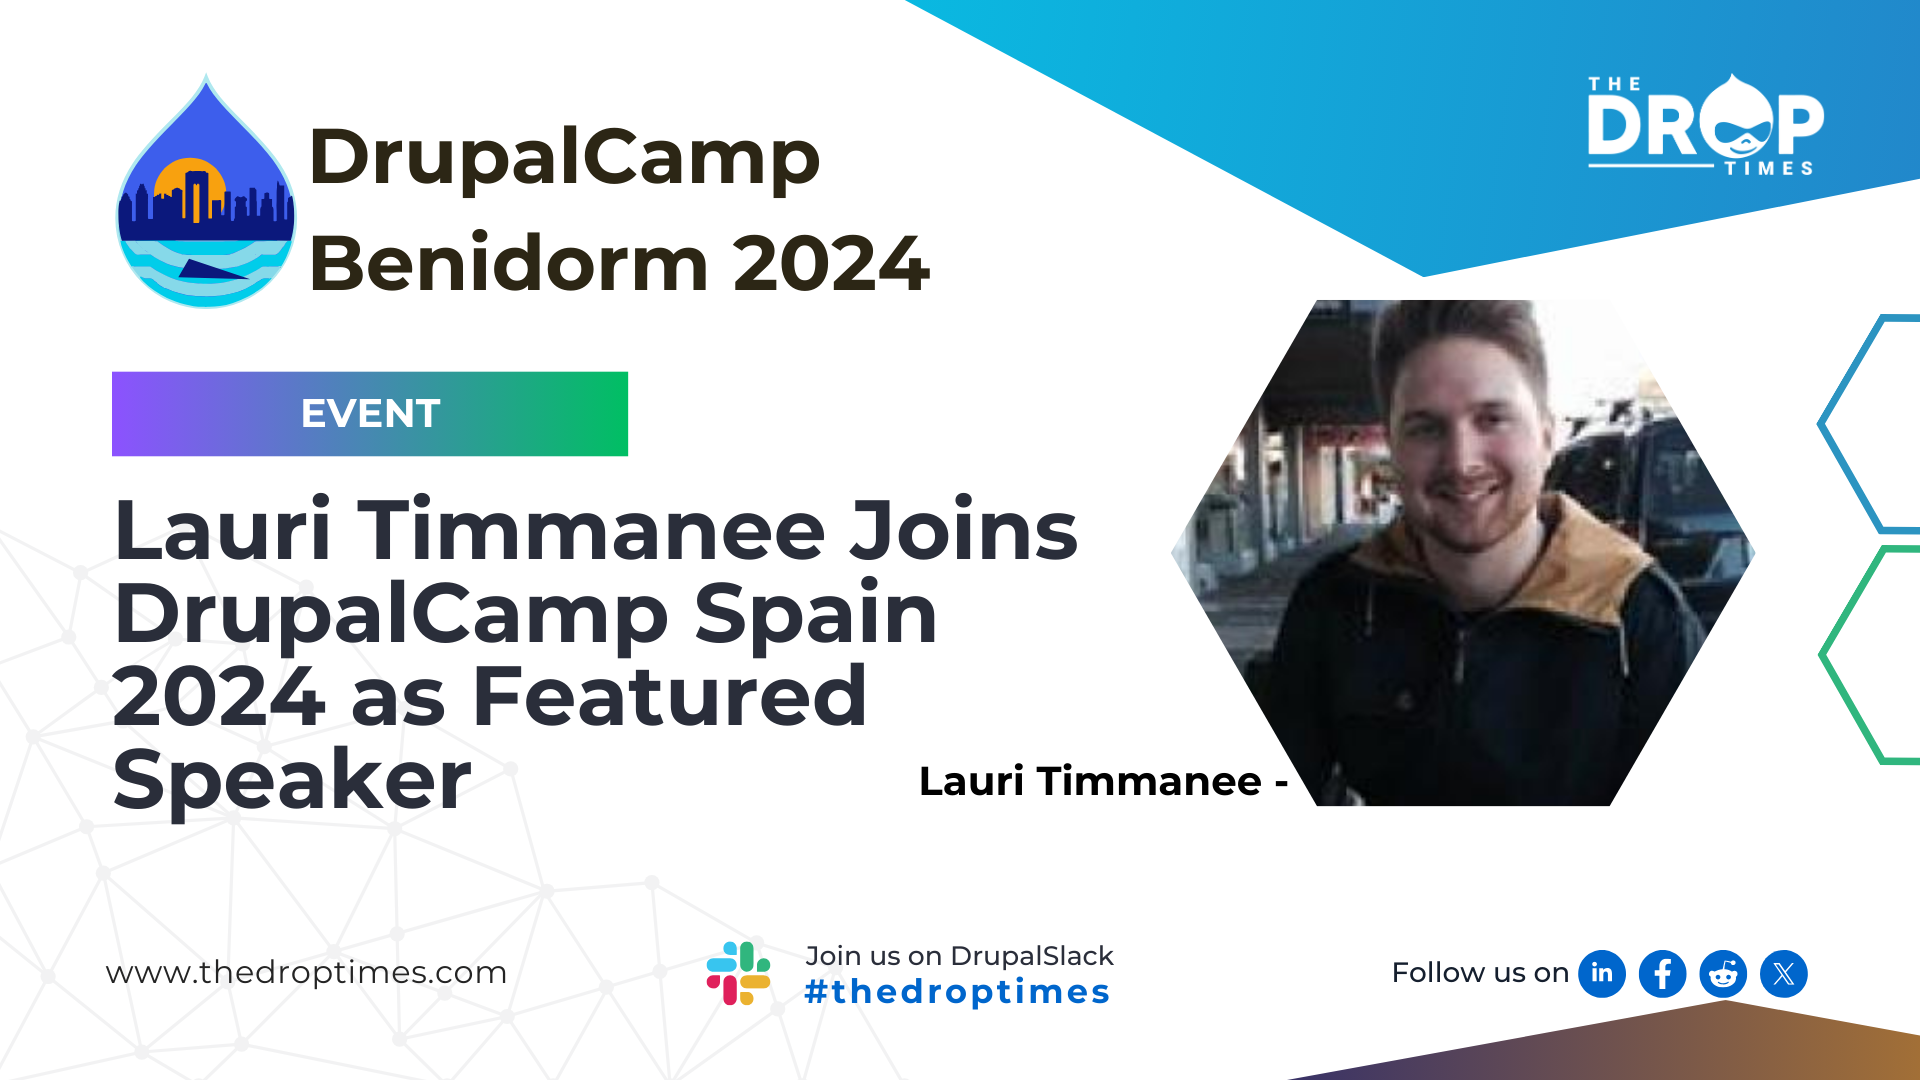 Lauri Timmanee Joins DrupalCamp Spain 2024 as Featured Speaker